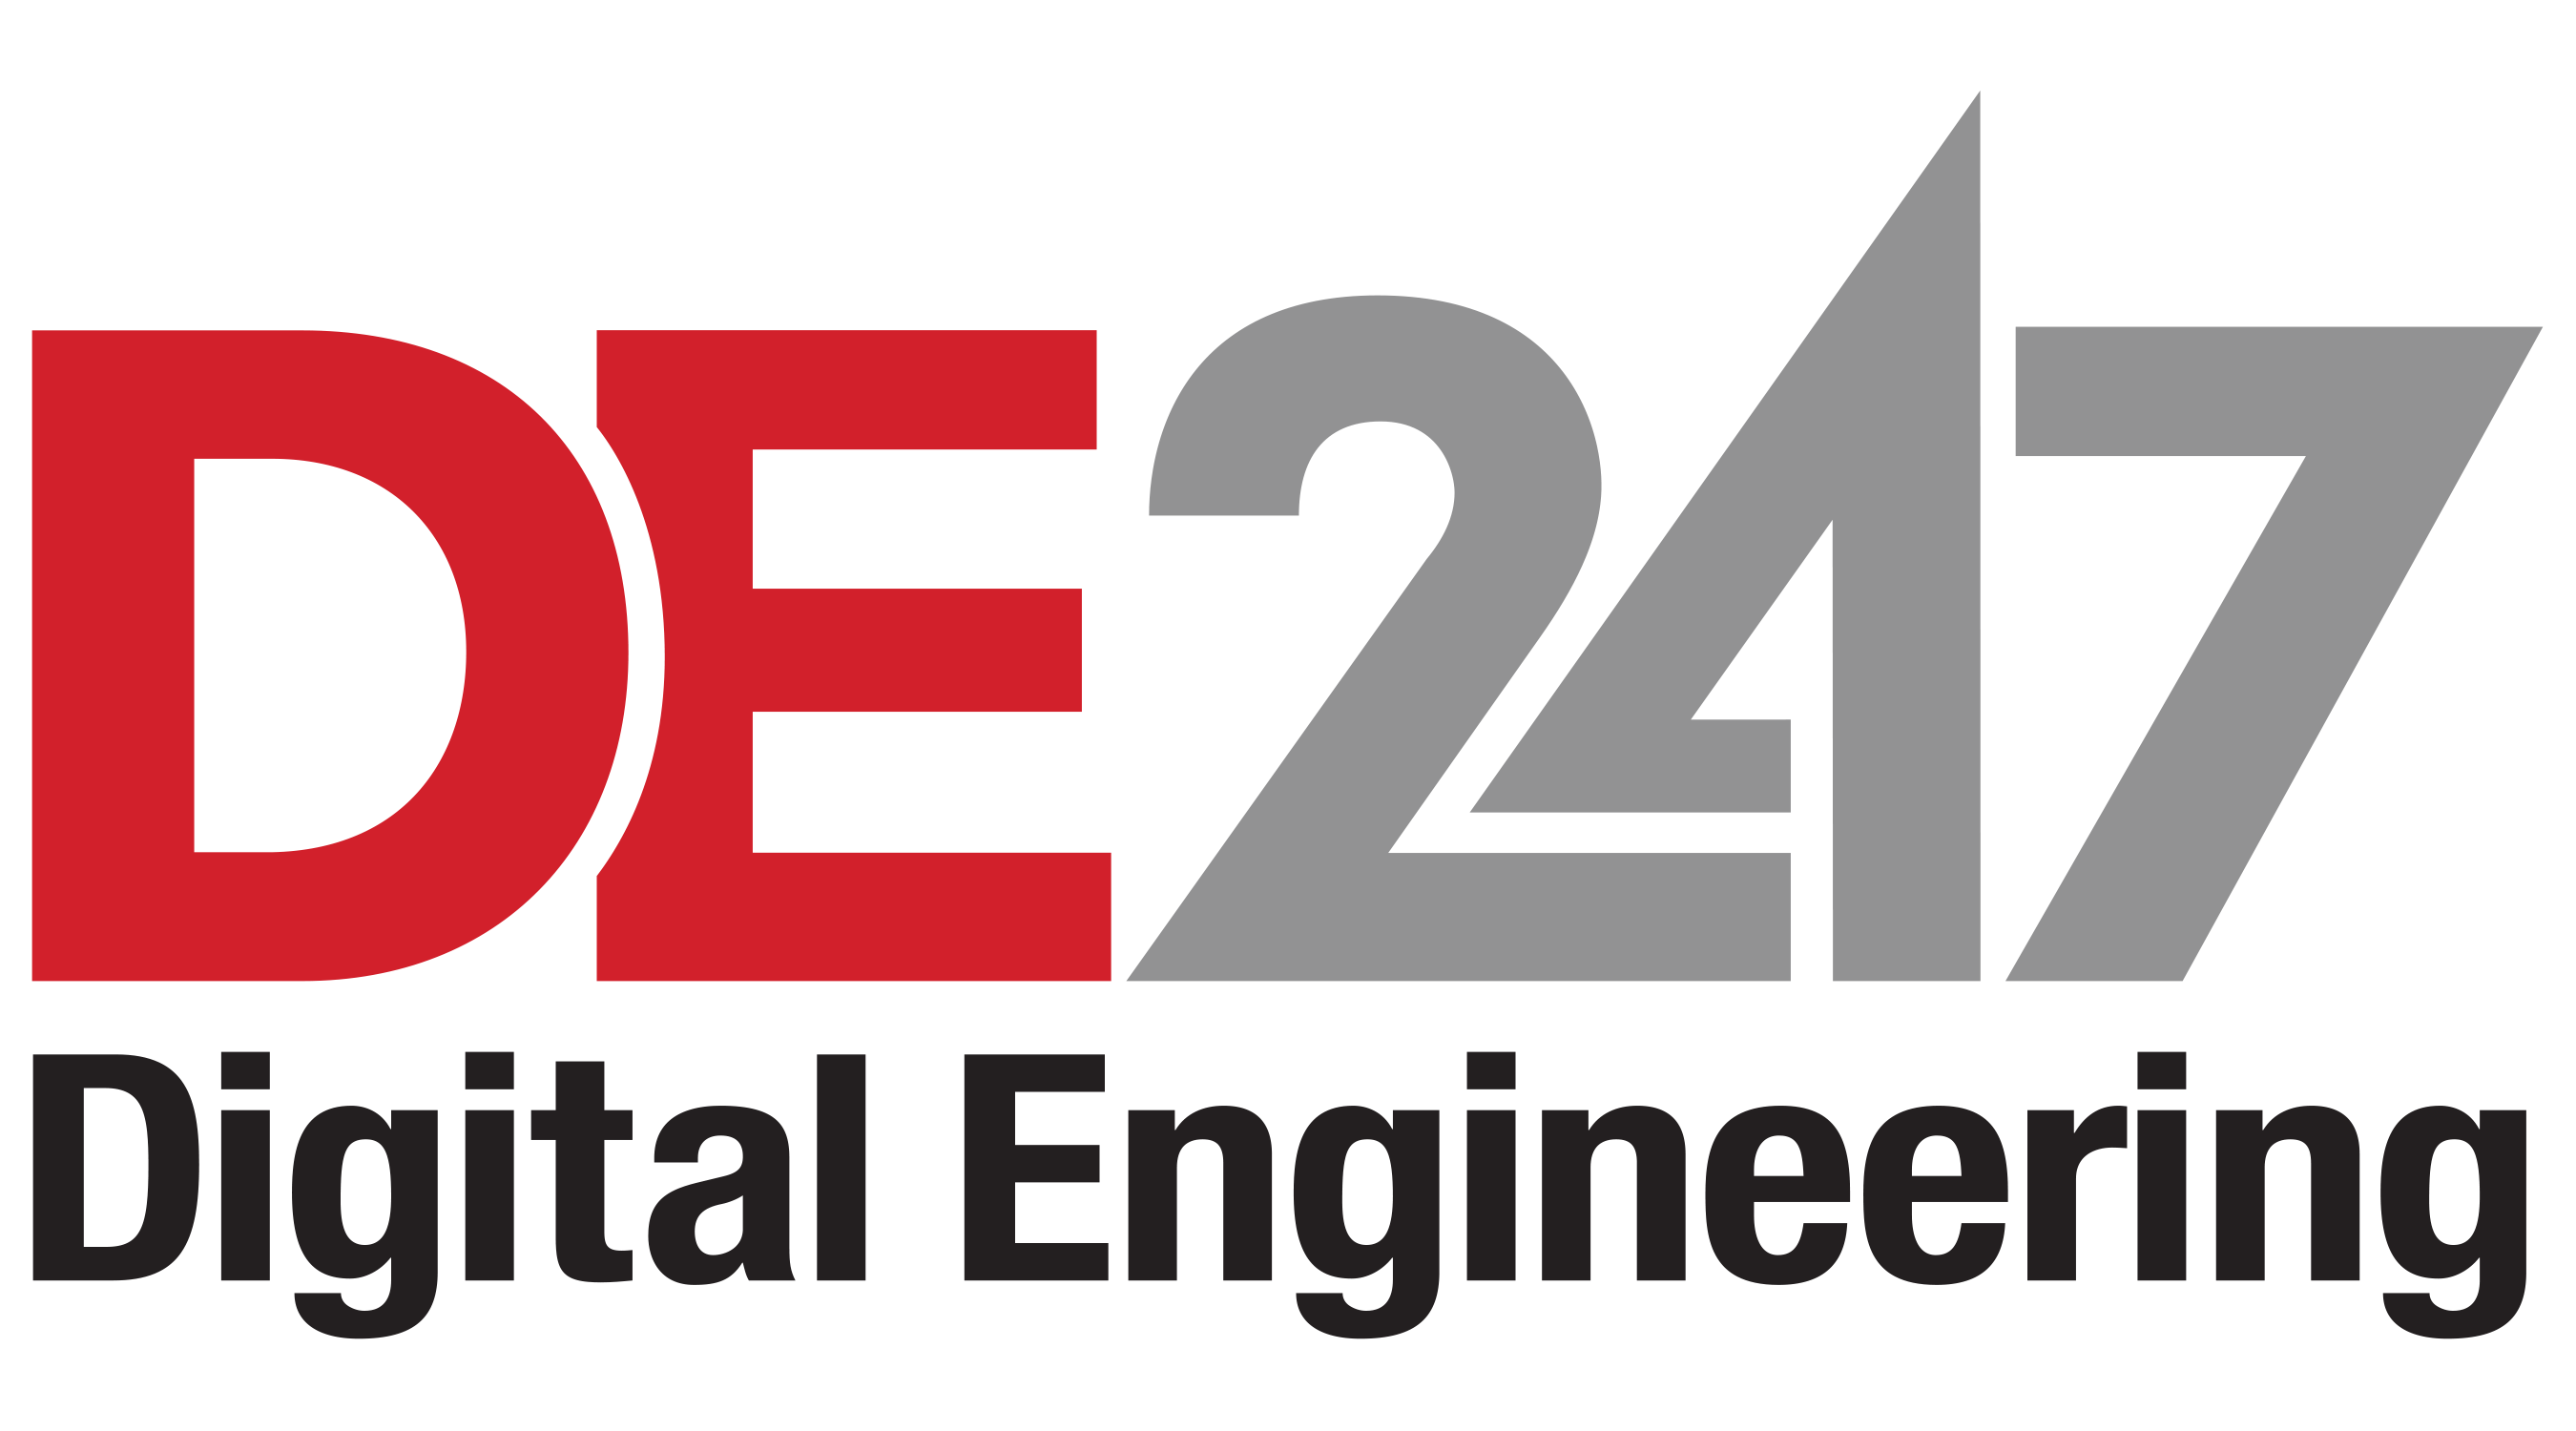 DE247 Digital Engineering